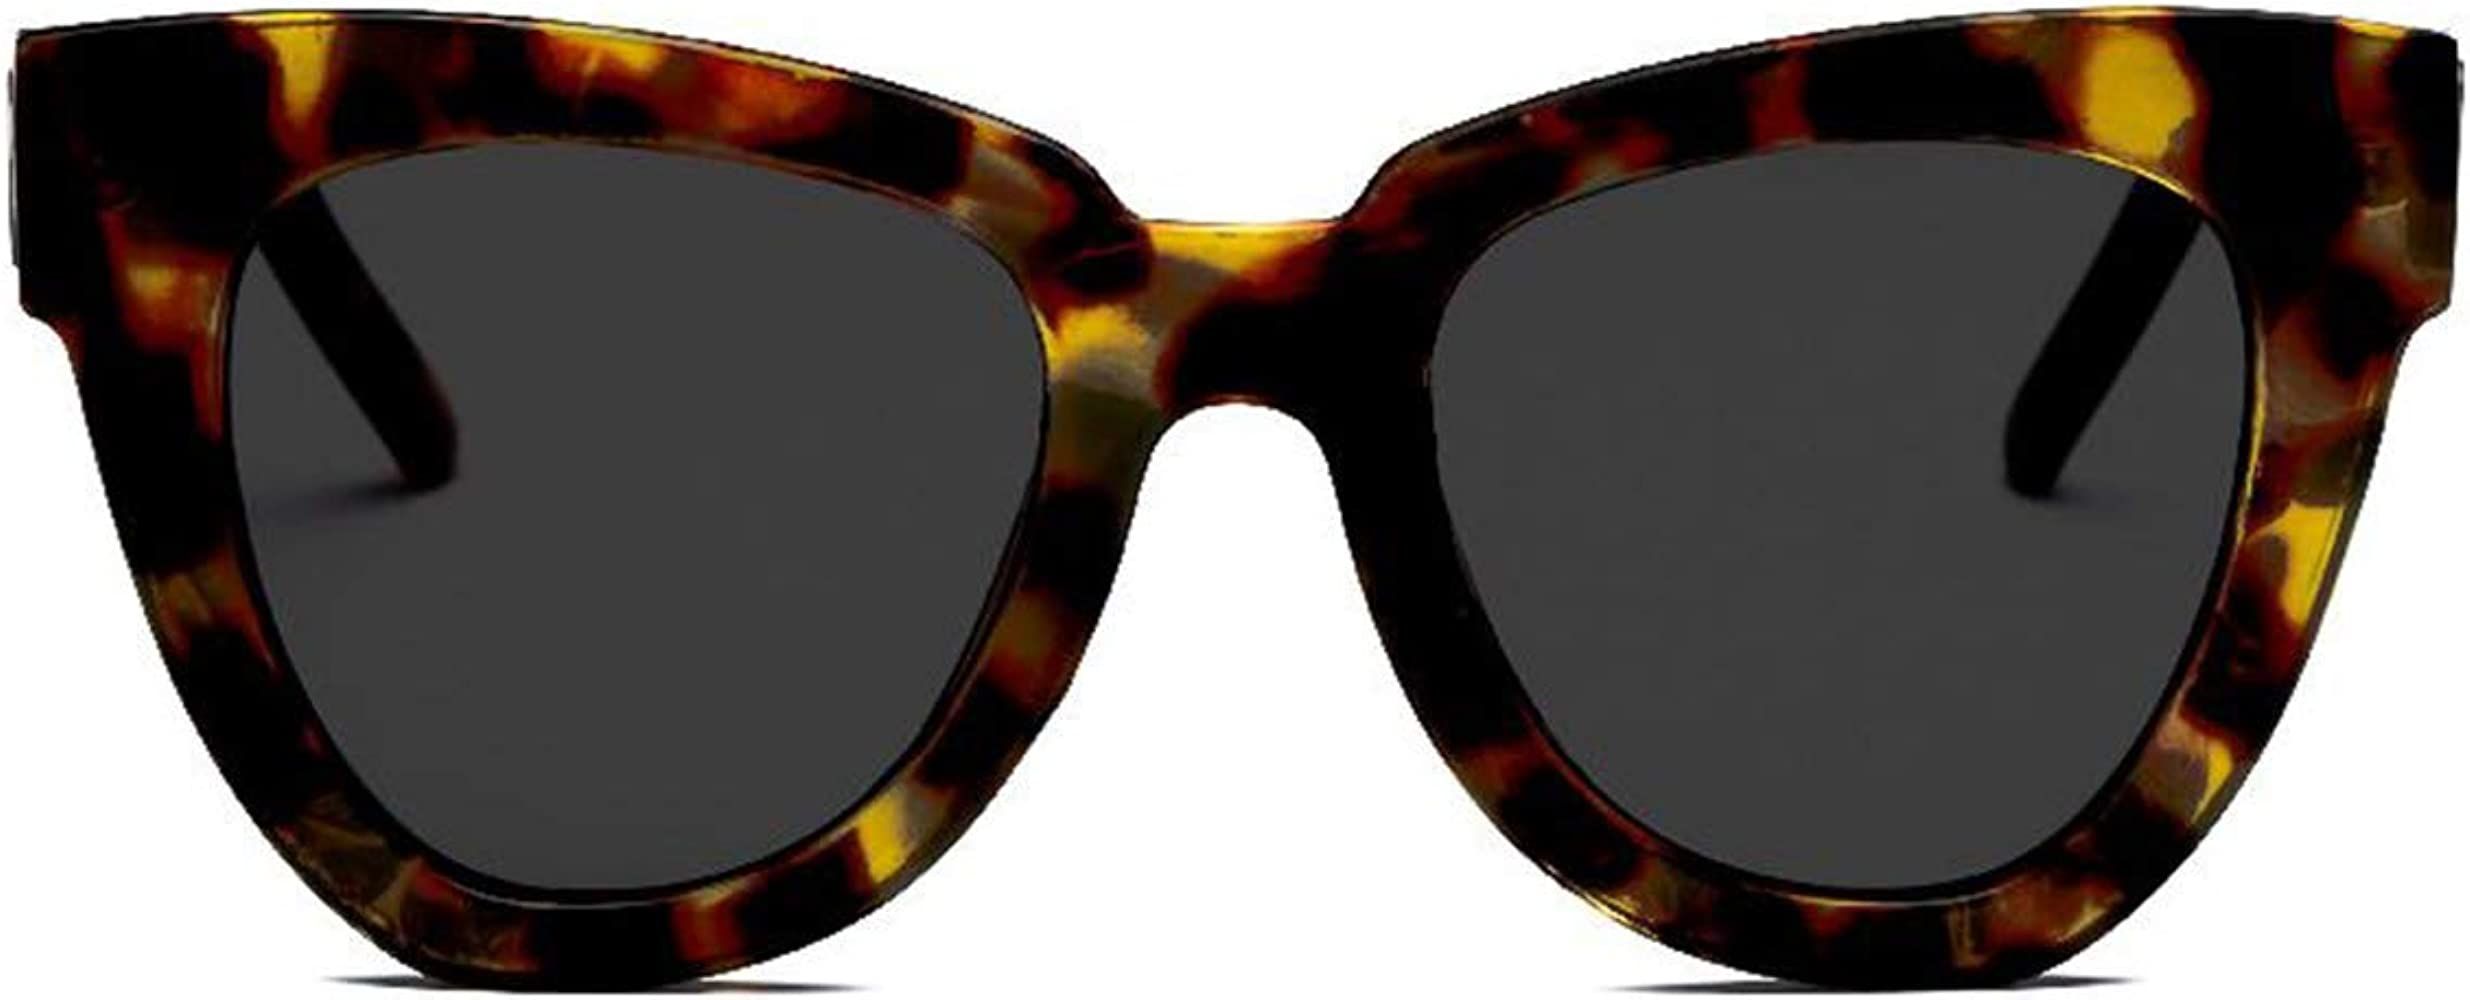 Dollger Retro Cat Eye Sunglasses Women Men Vintage Square Tortoise Shell Fashion Cateye Sunglasse... | Amazon (US)